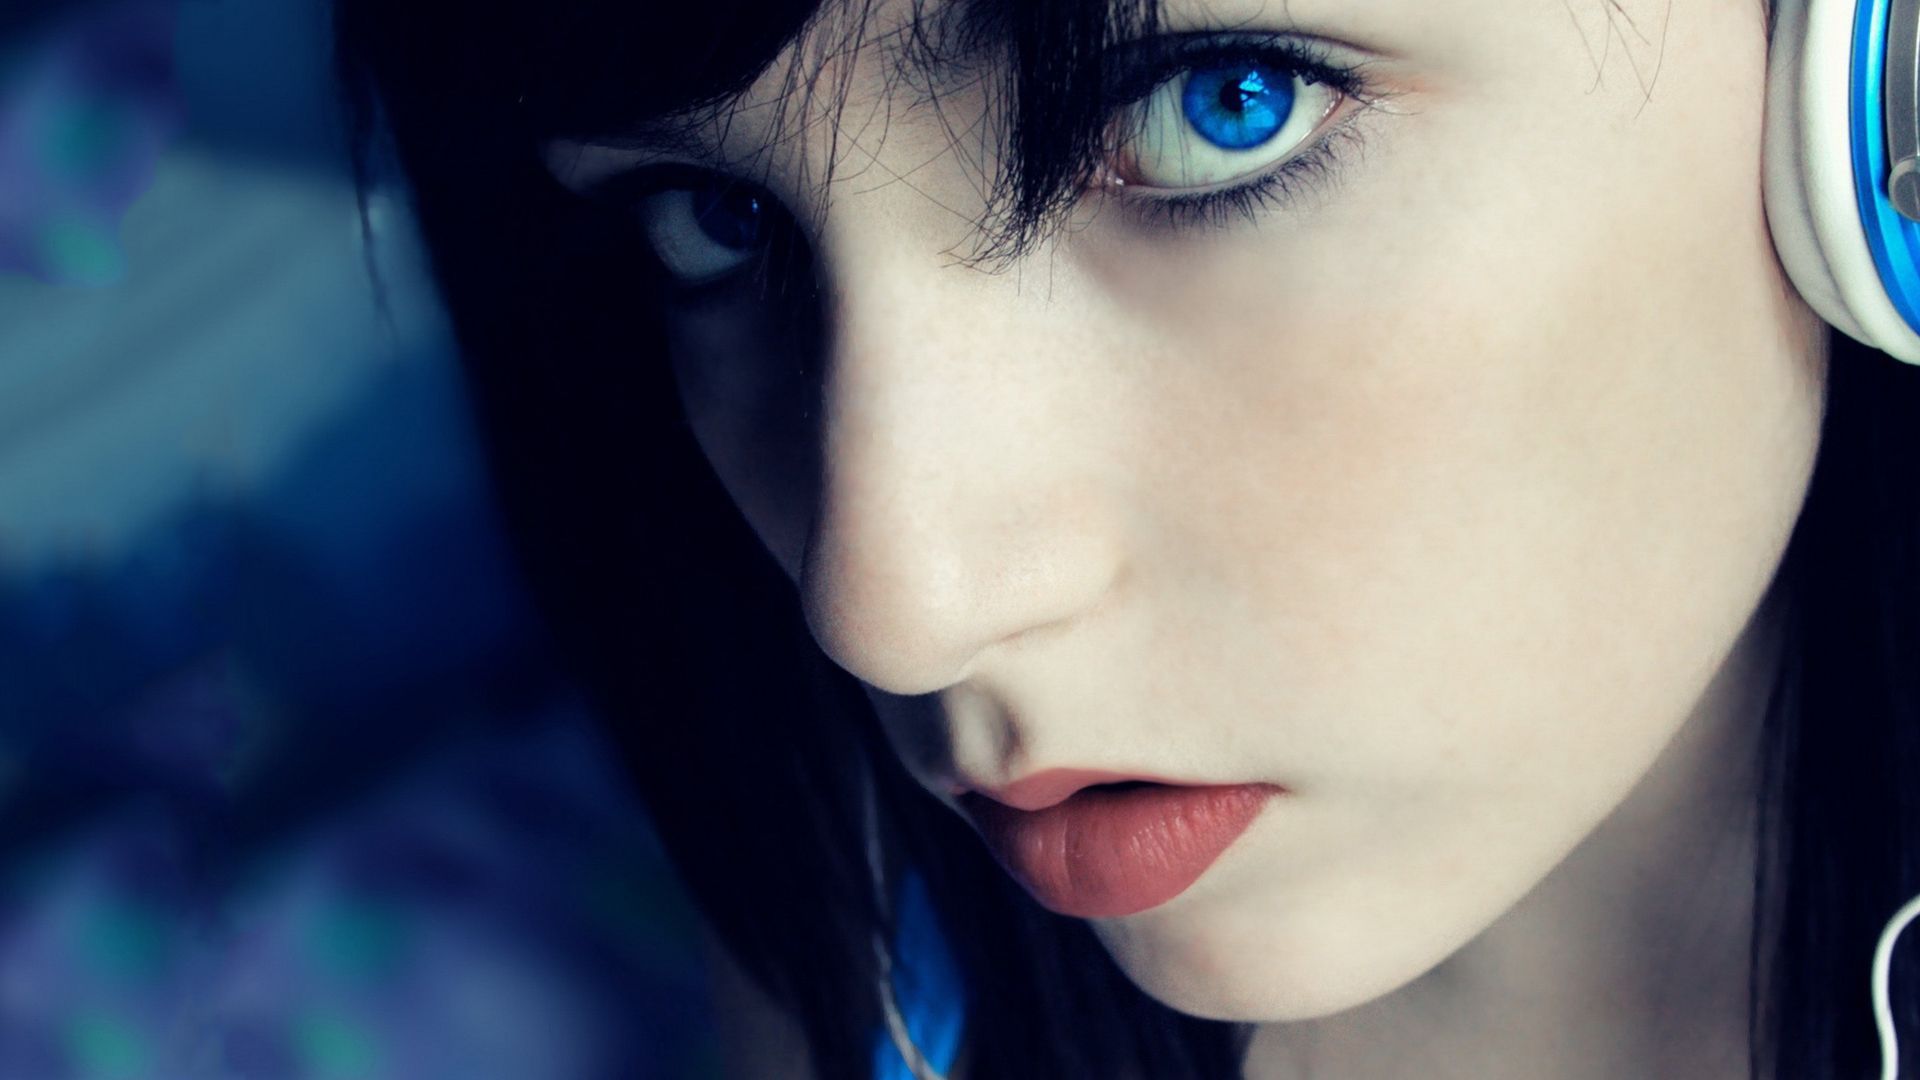 headphones women blue eyes faces red lips / 1920x1080 Wallpaper. Eyes wallpaper, Black hair blue eyes, Girl with headphones